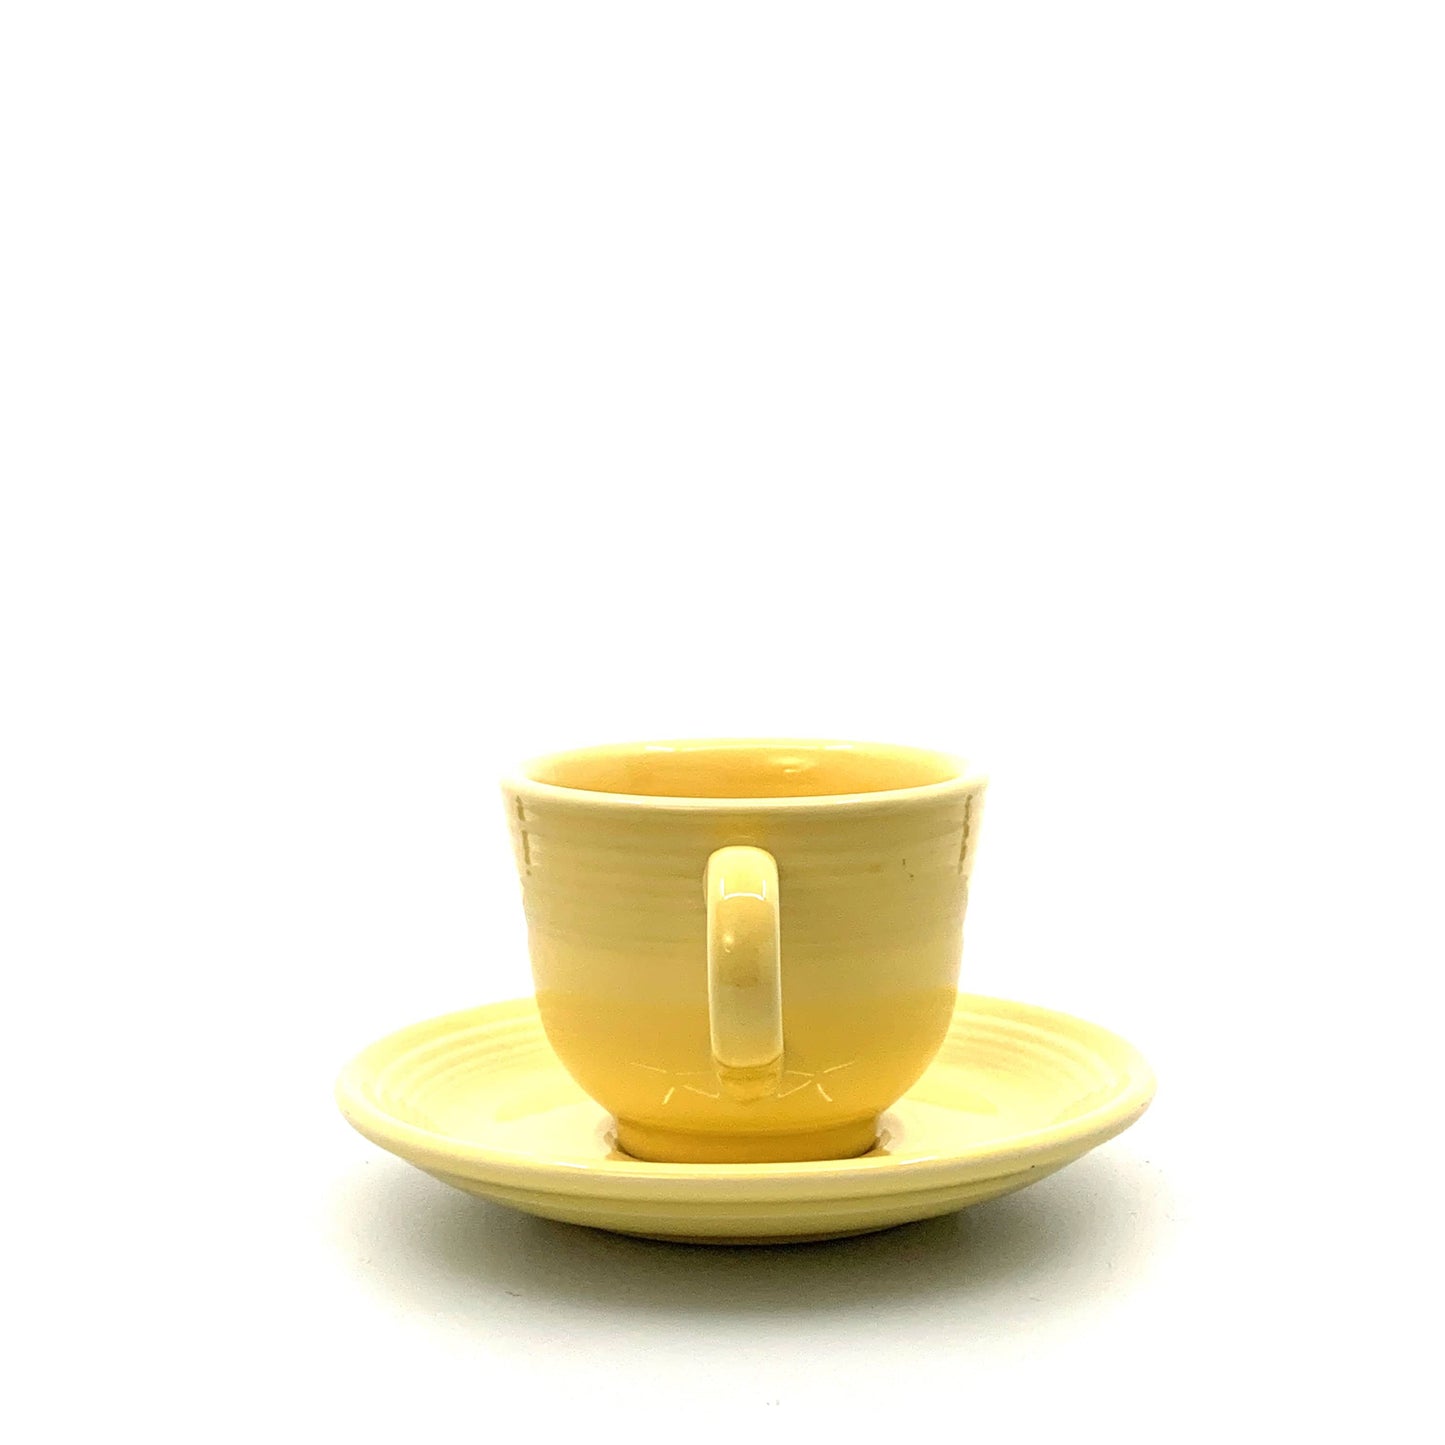 Fiesta Banana Yellow Replacement Tea Coffee Cup and Saucer Set 7.75 Fl Oz Homer Laughlin Co USA.